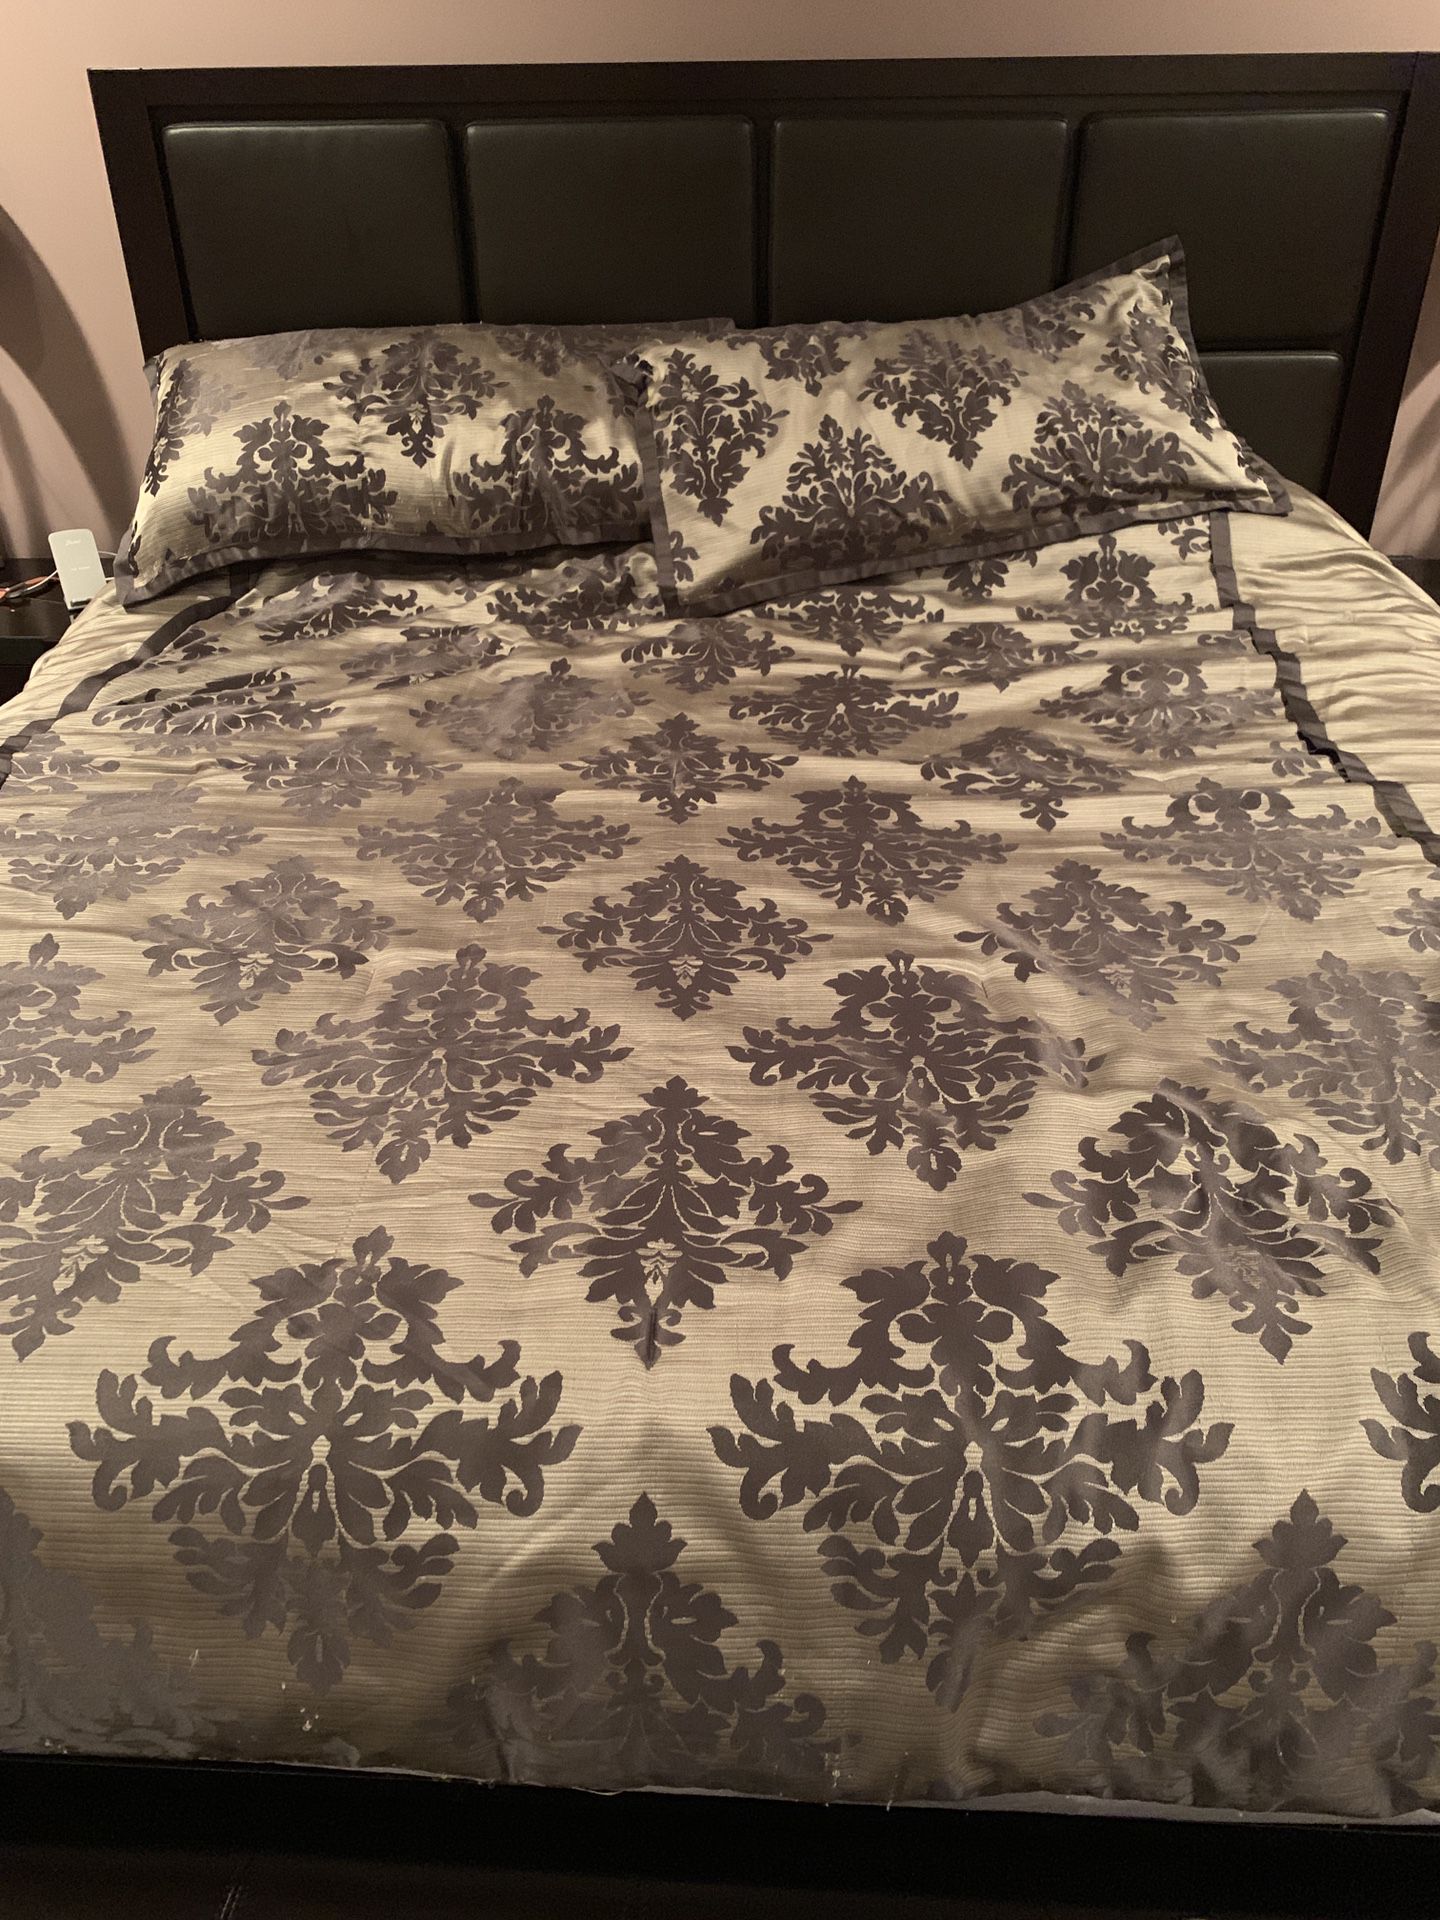 King size comforter set